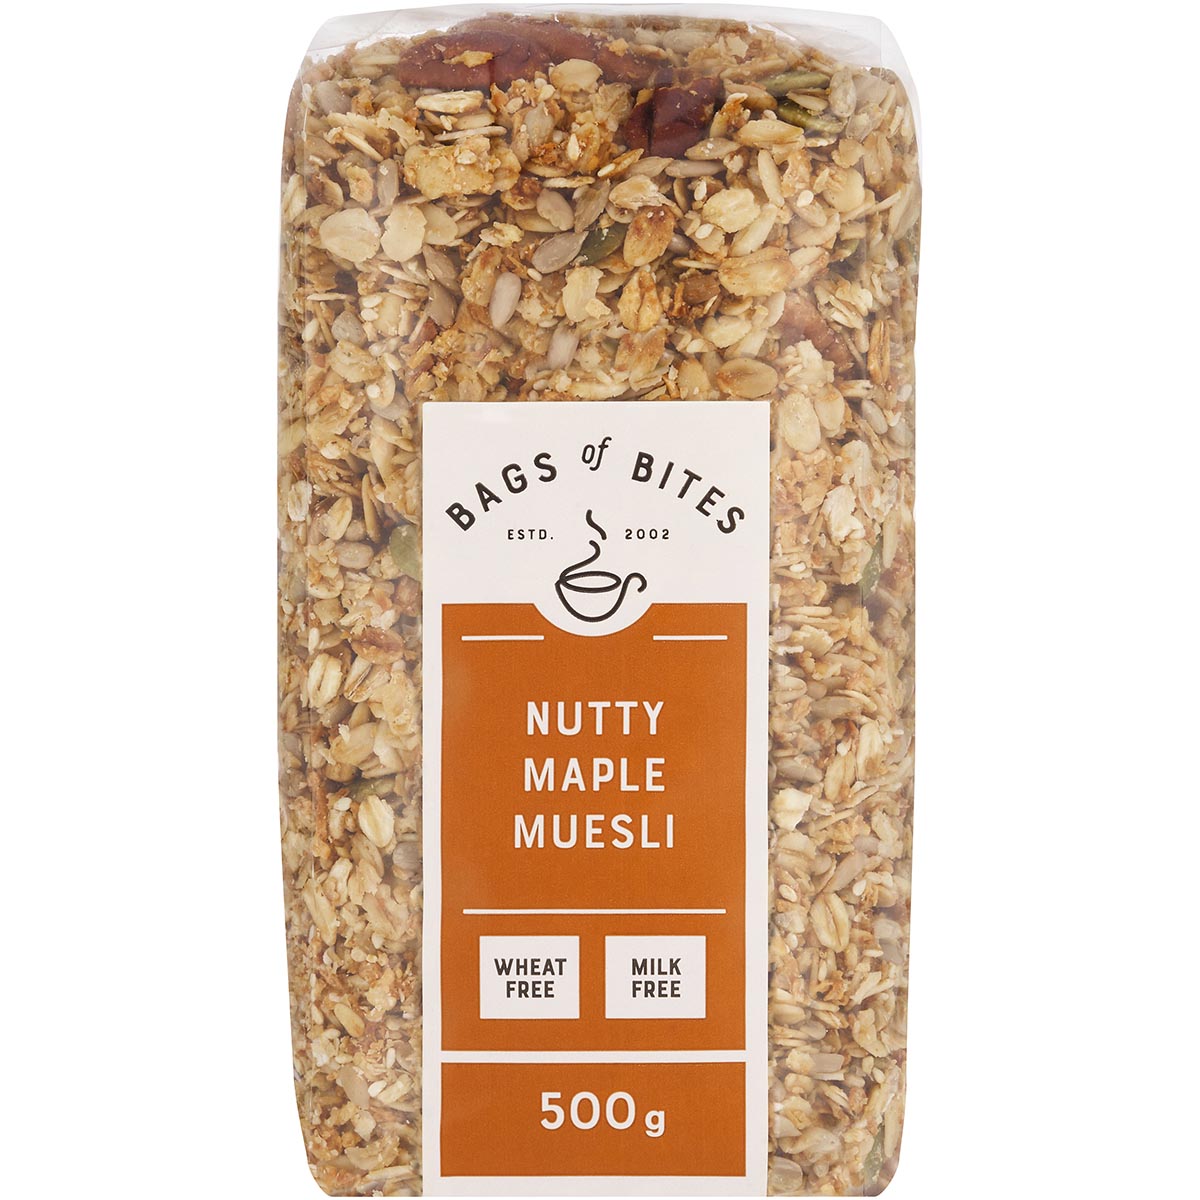 Nutty Maple Muesli - Wheat Free, Dairy Free